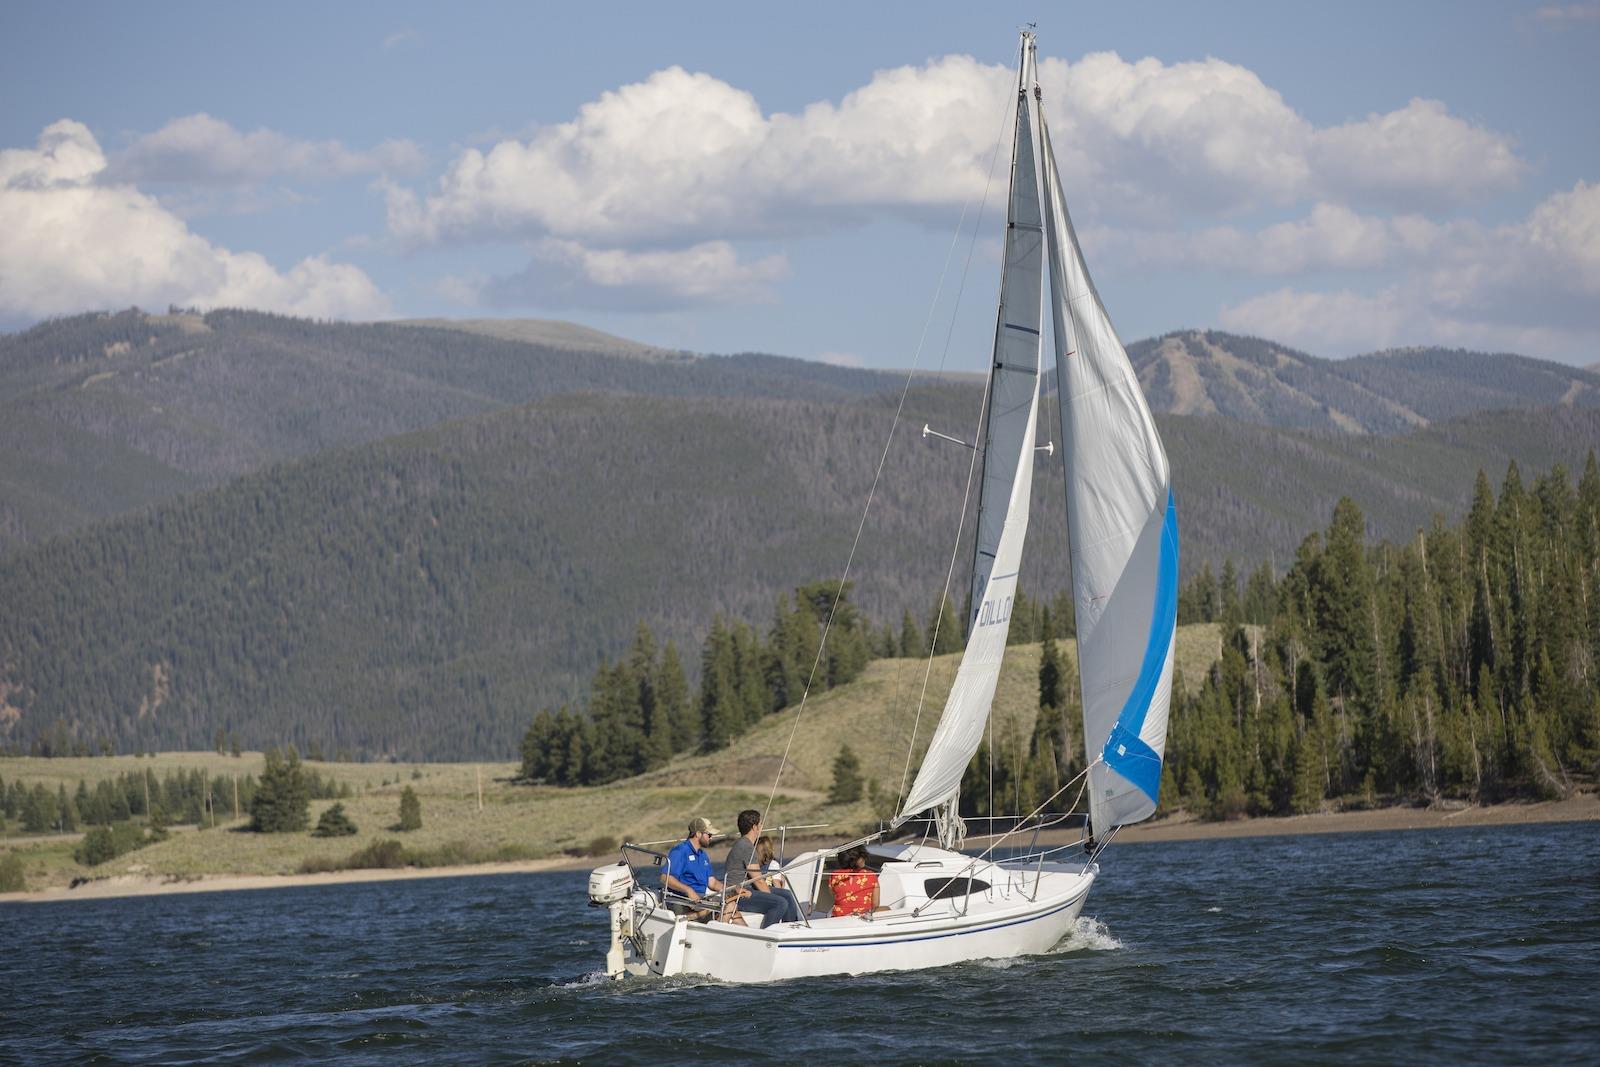 sailing on Lake Dillon, Colorado